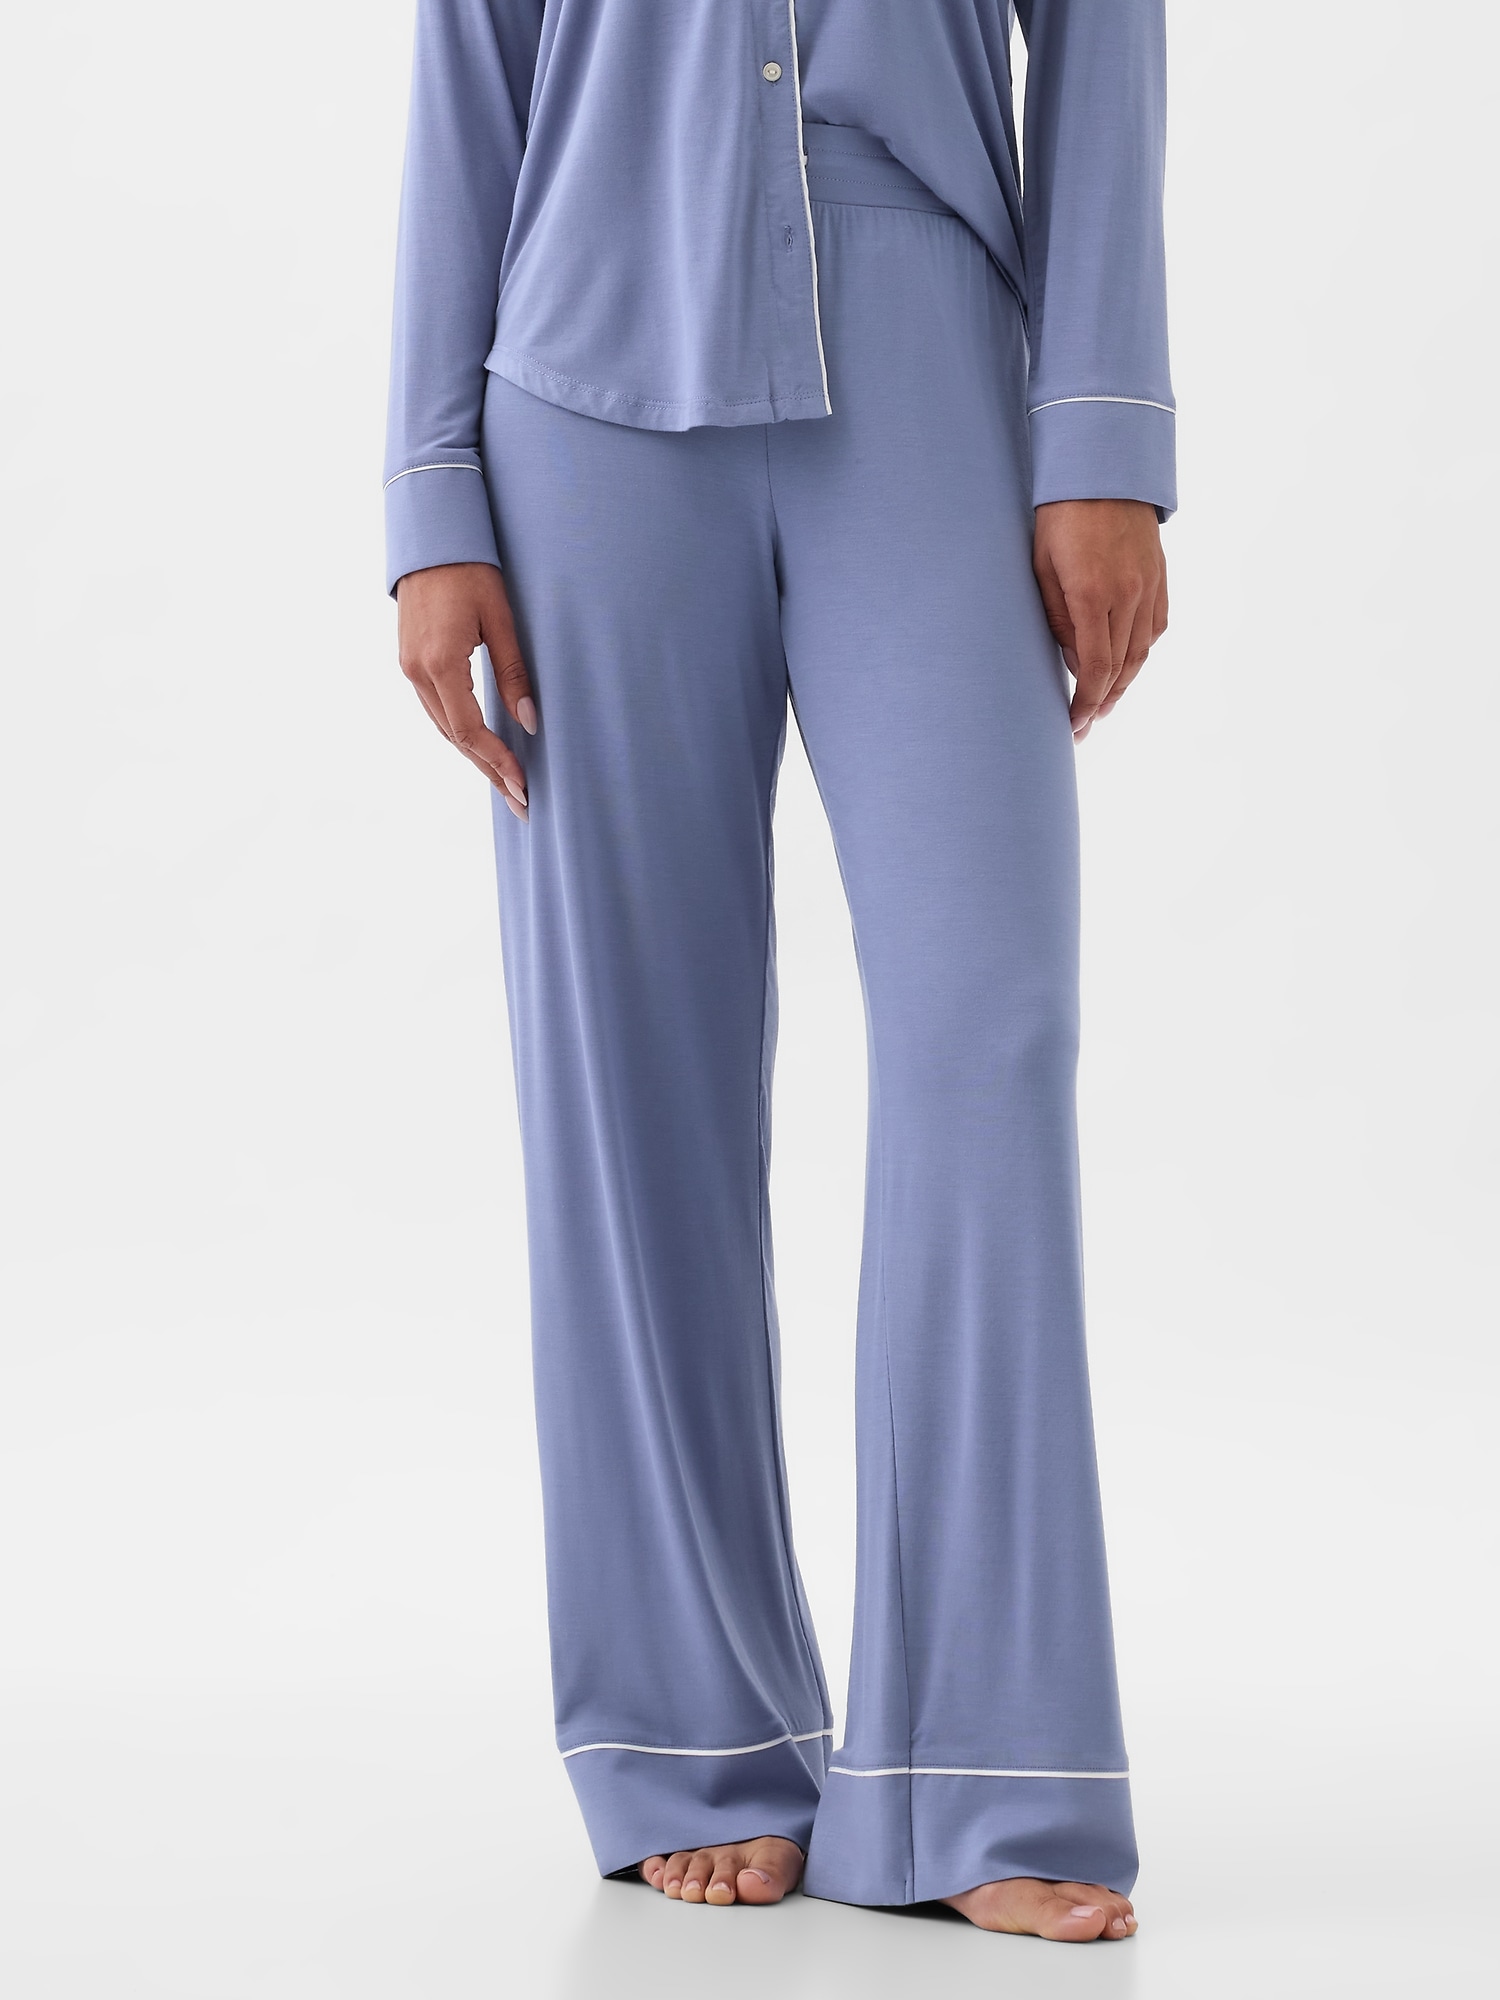 Leggings Depot Modal Pajama Pants for Women